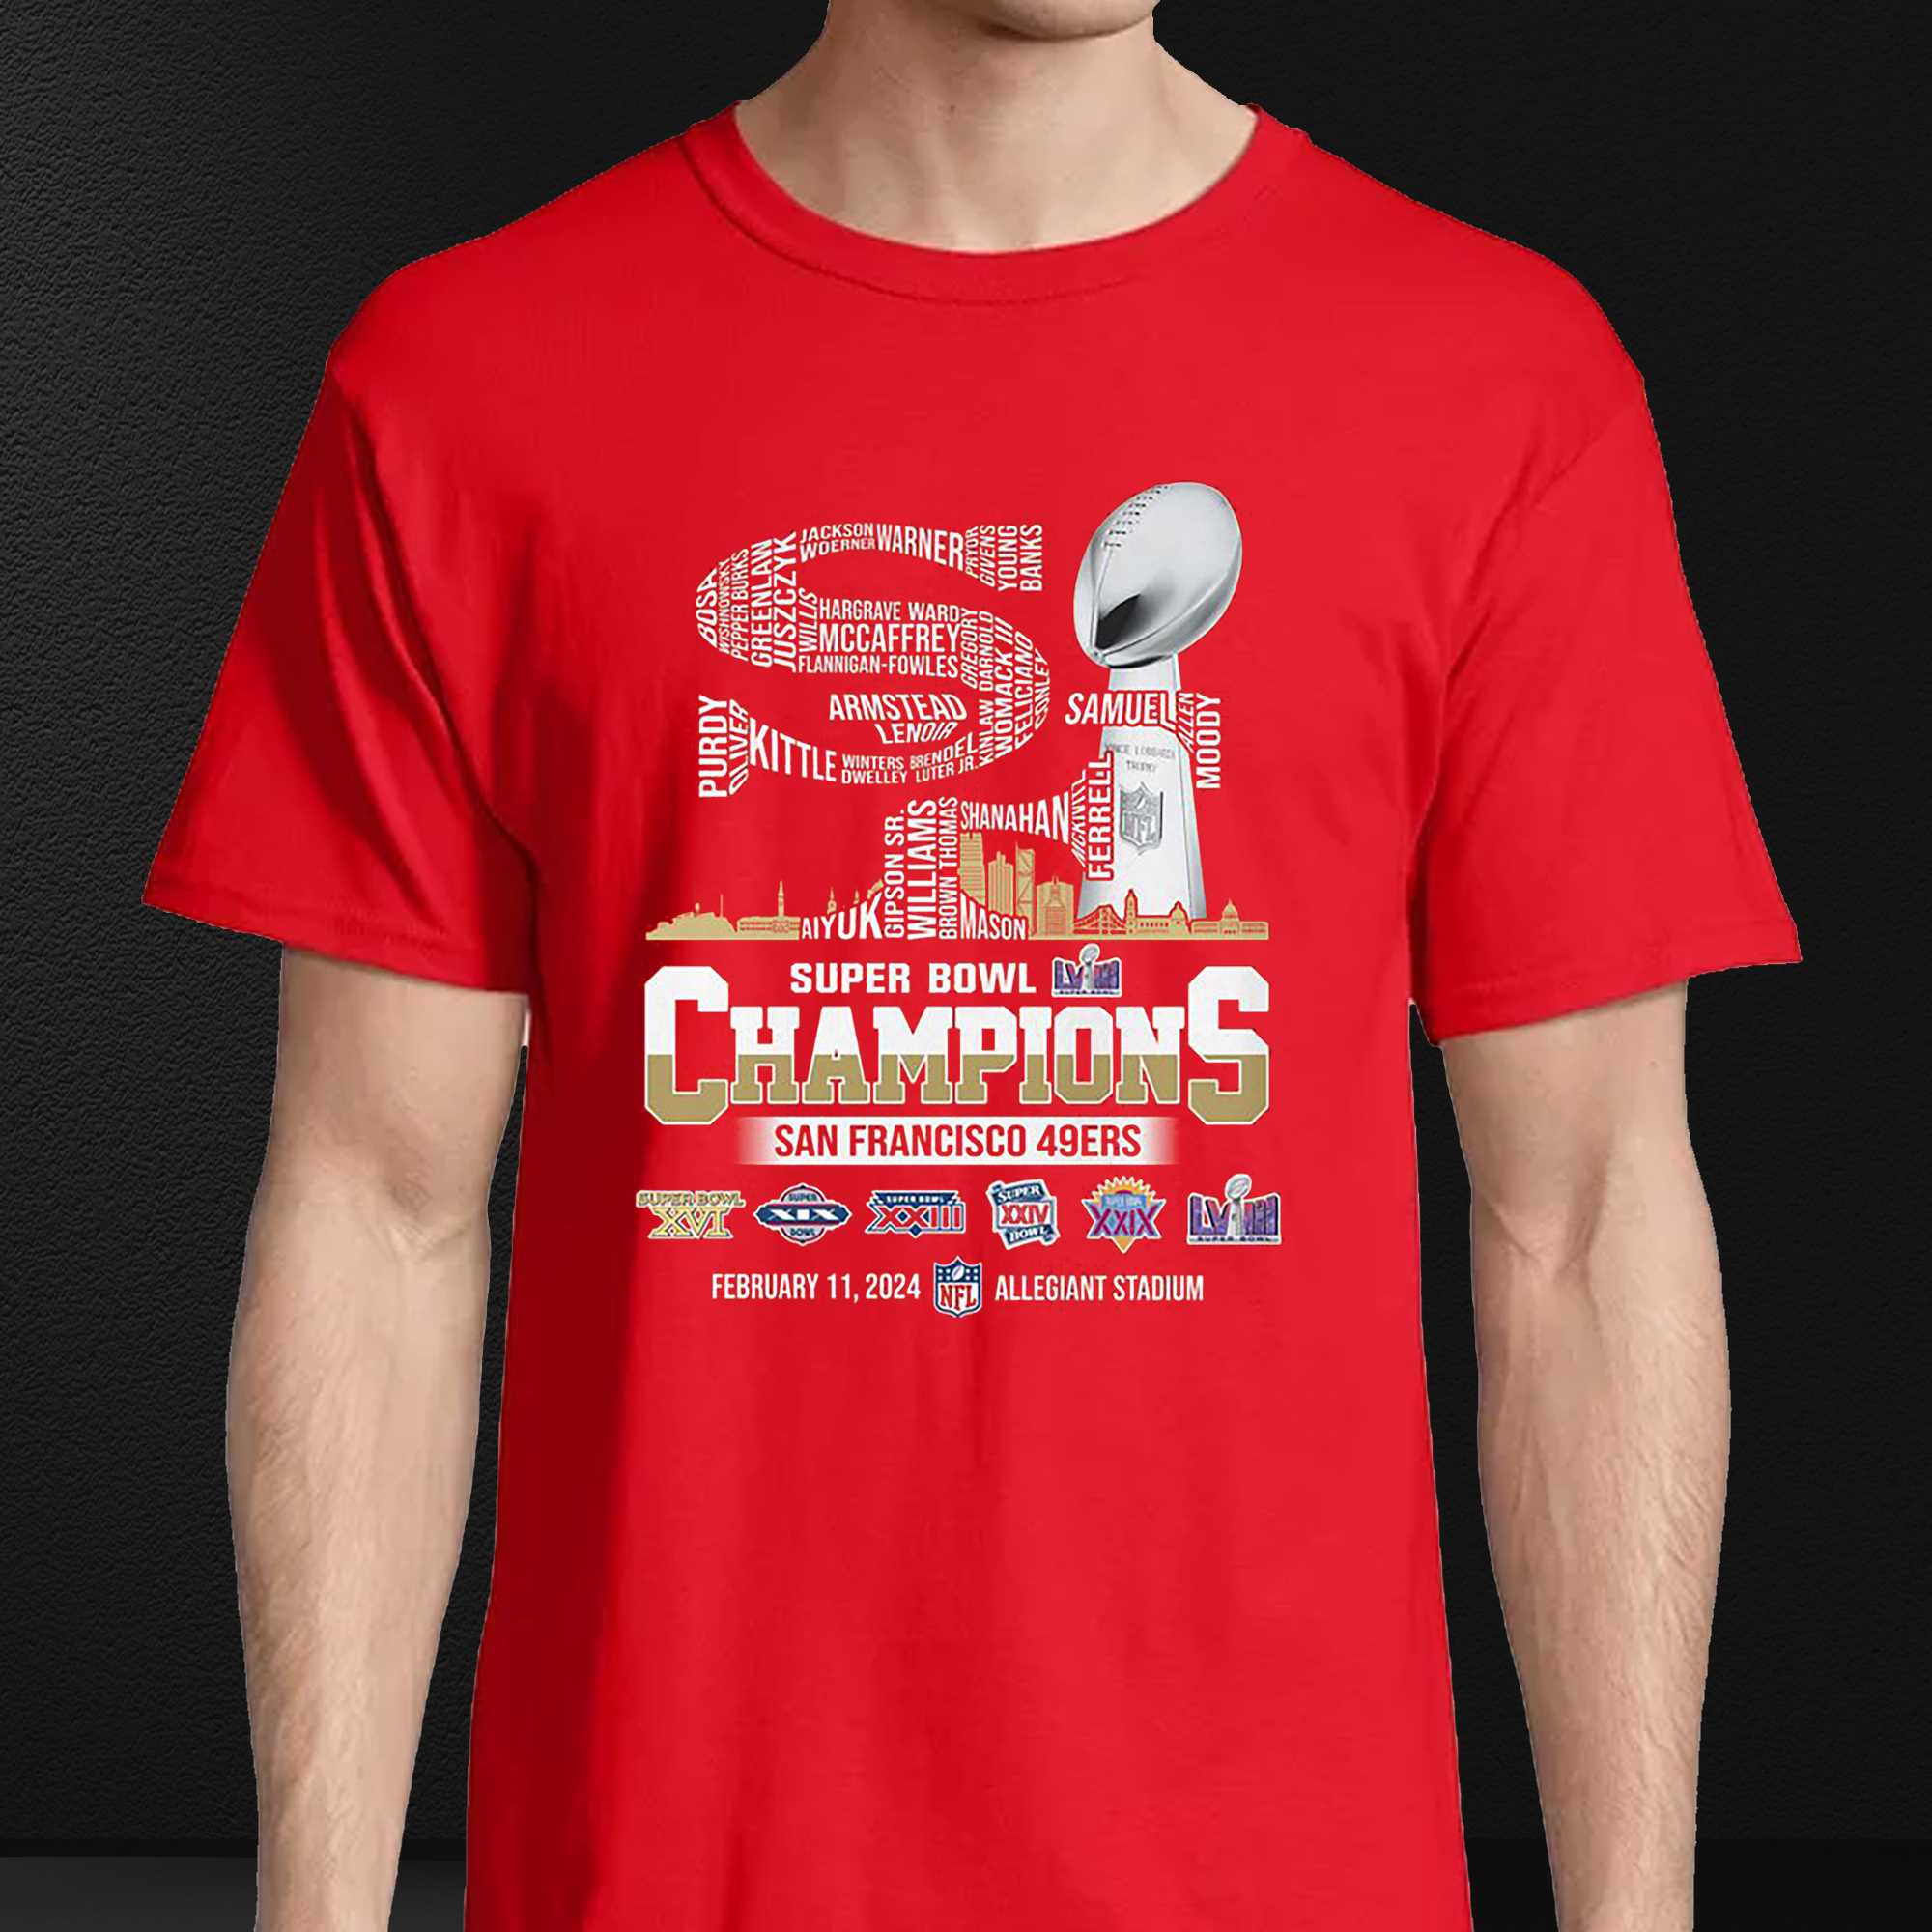 Super Bowl Champions 49ers T-shirt 